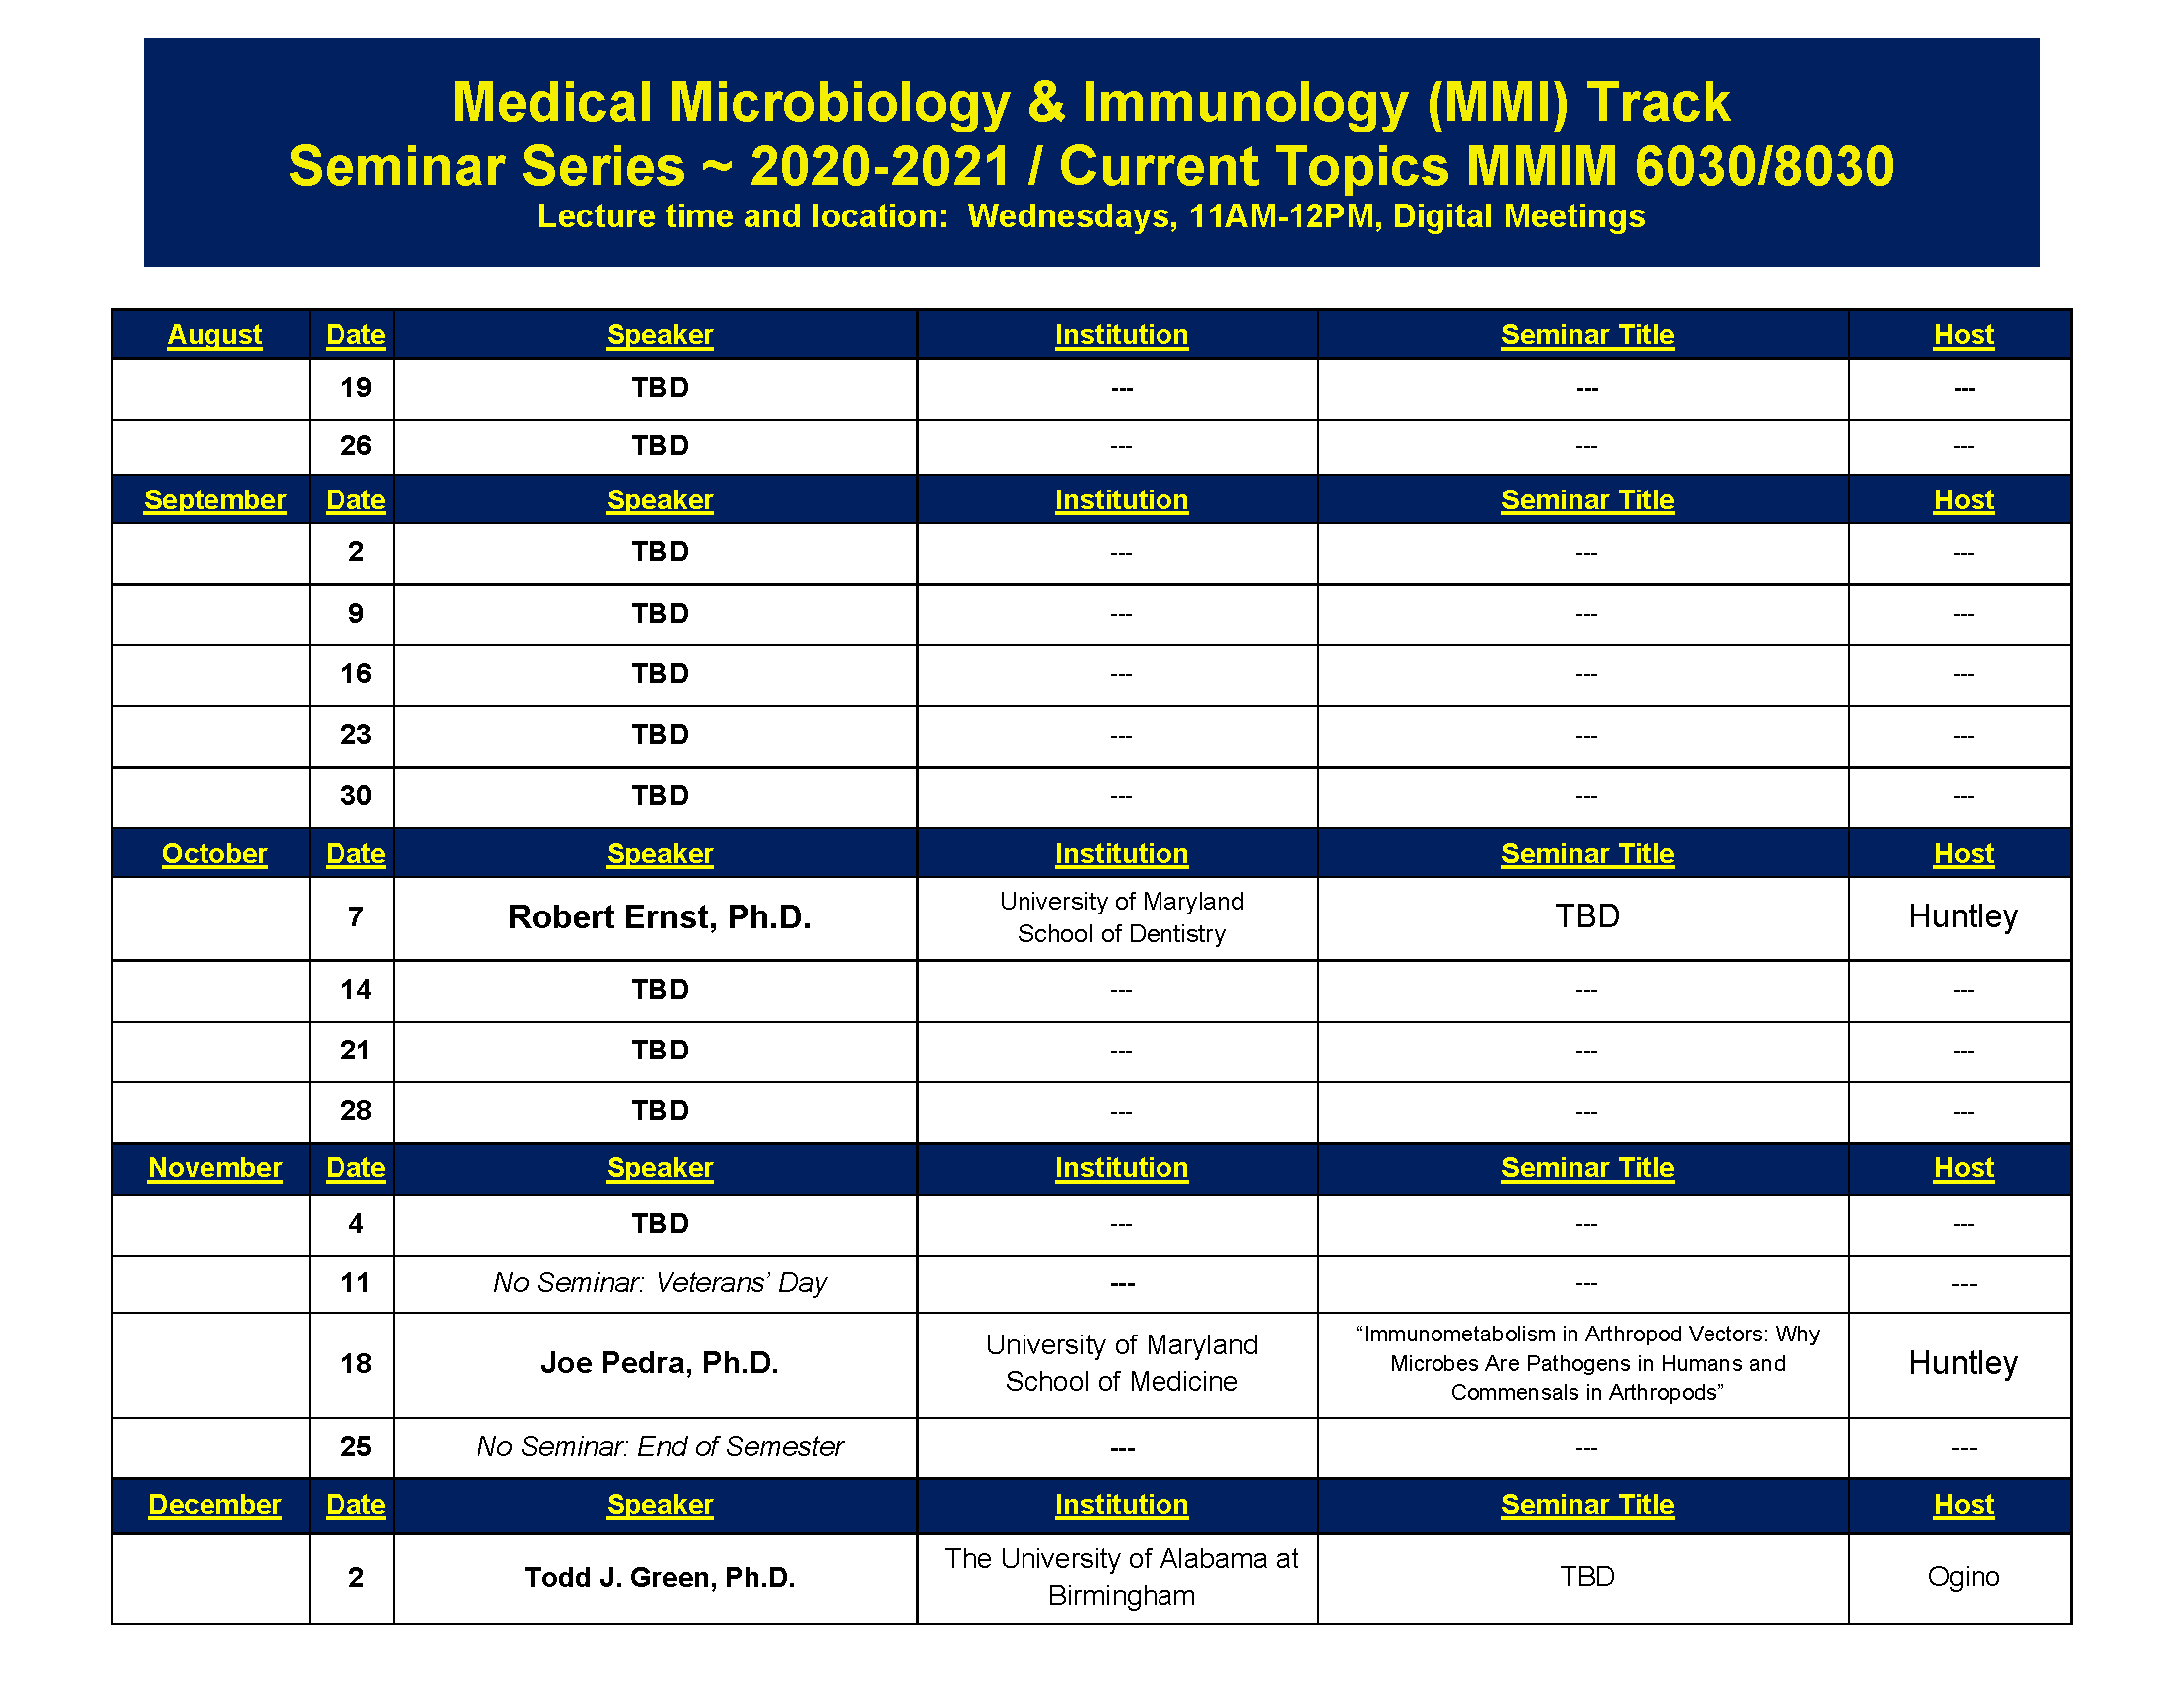 hillsdale college calendar 2021 Medical Microbiology And Immunology Calendar Of Events hillsdale college calendar 2021